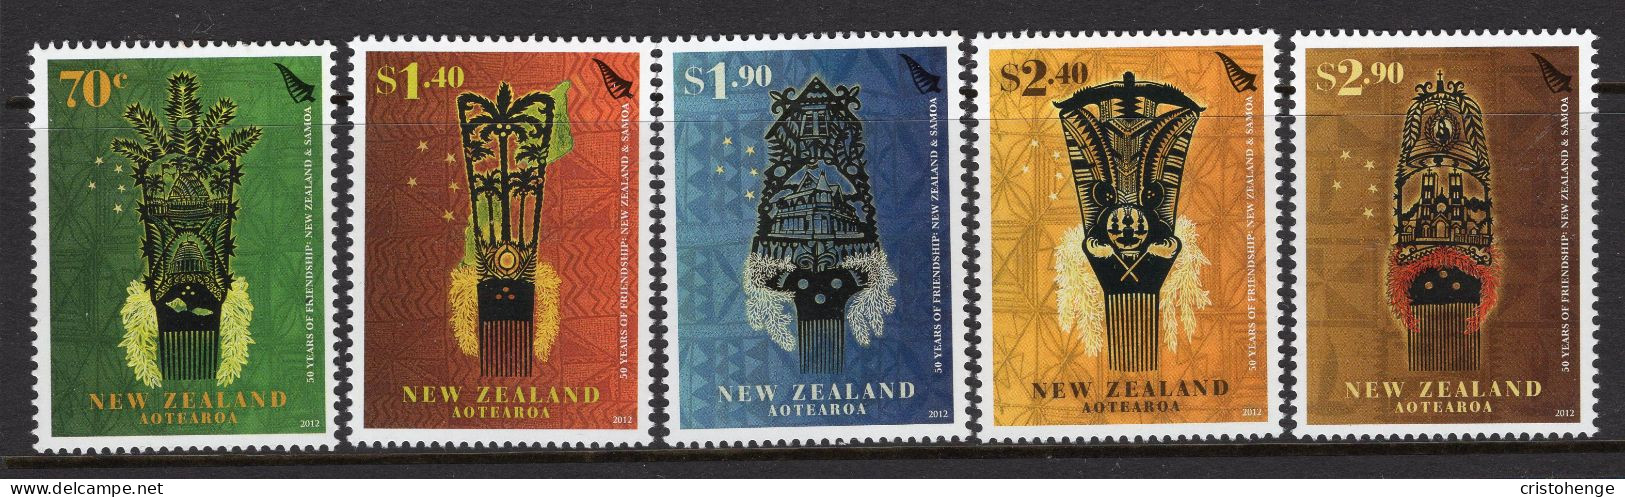 New Zealand 2012 50th Anniversary Of Treaty Of Friendship With Samoa Set MNH (SG 3380-3384) - Ungebraucht